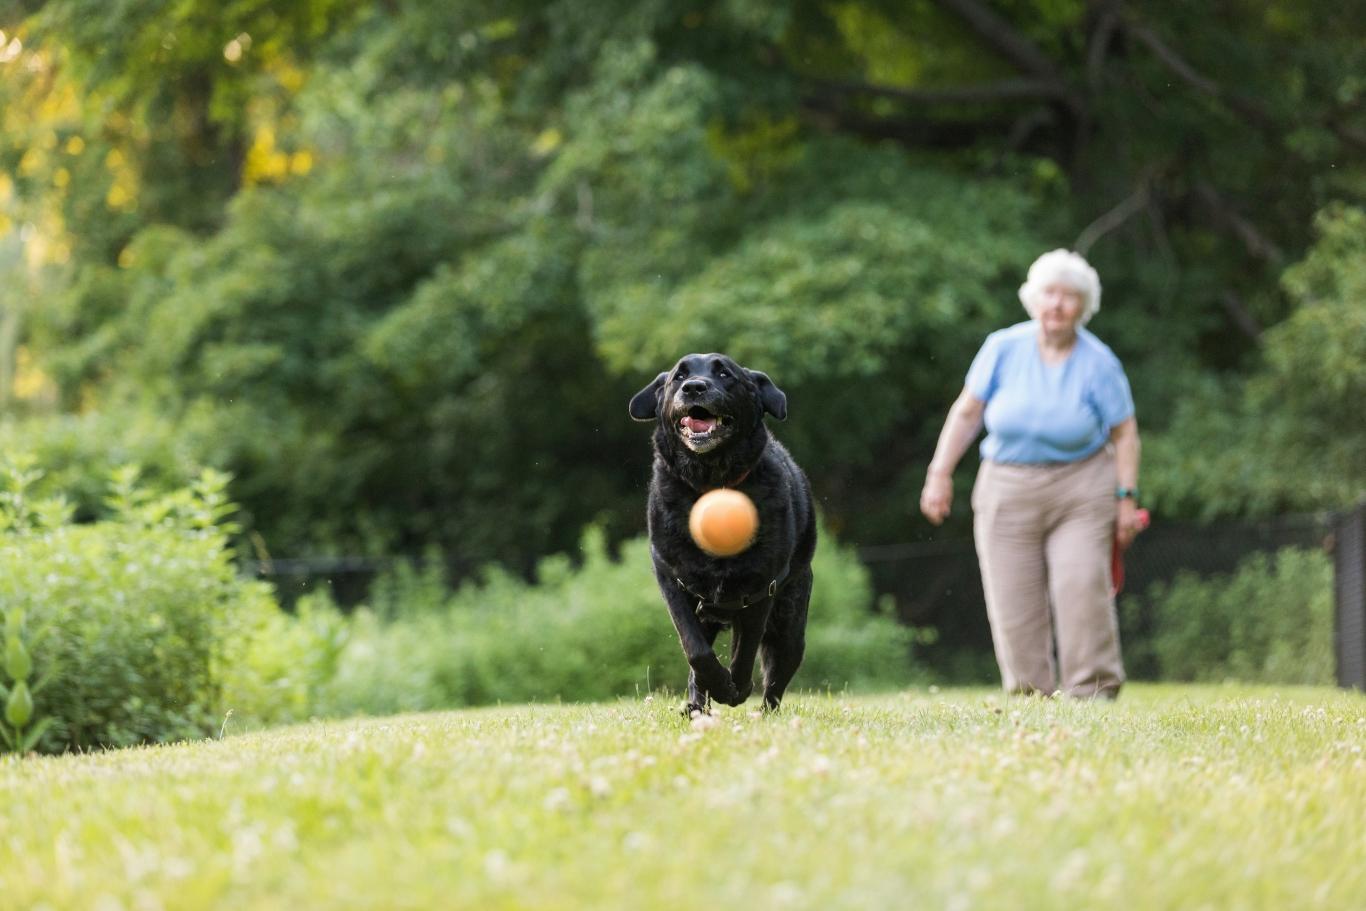 Senior woman playing with dog